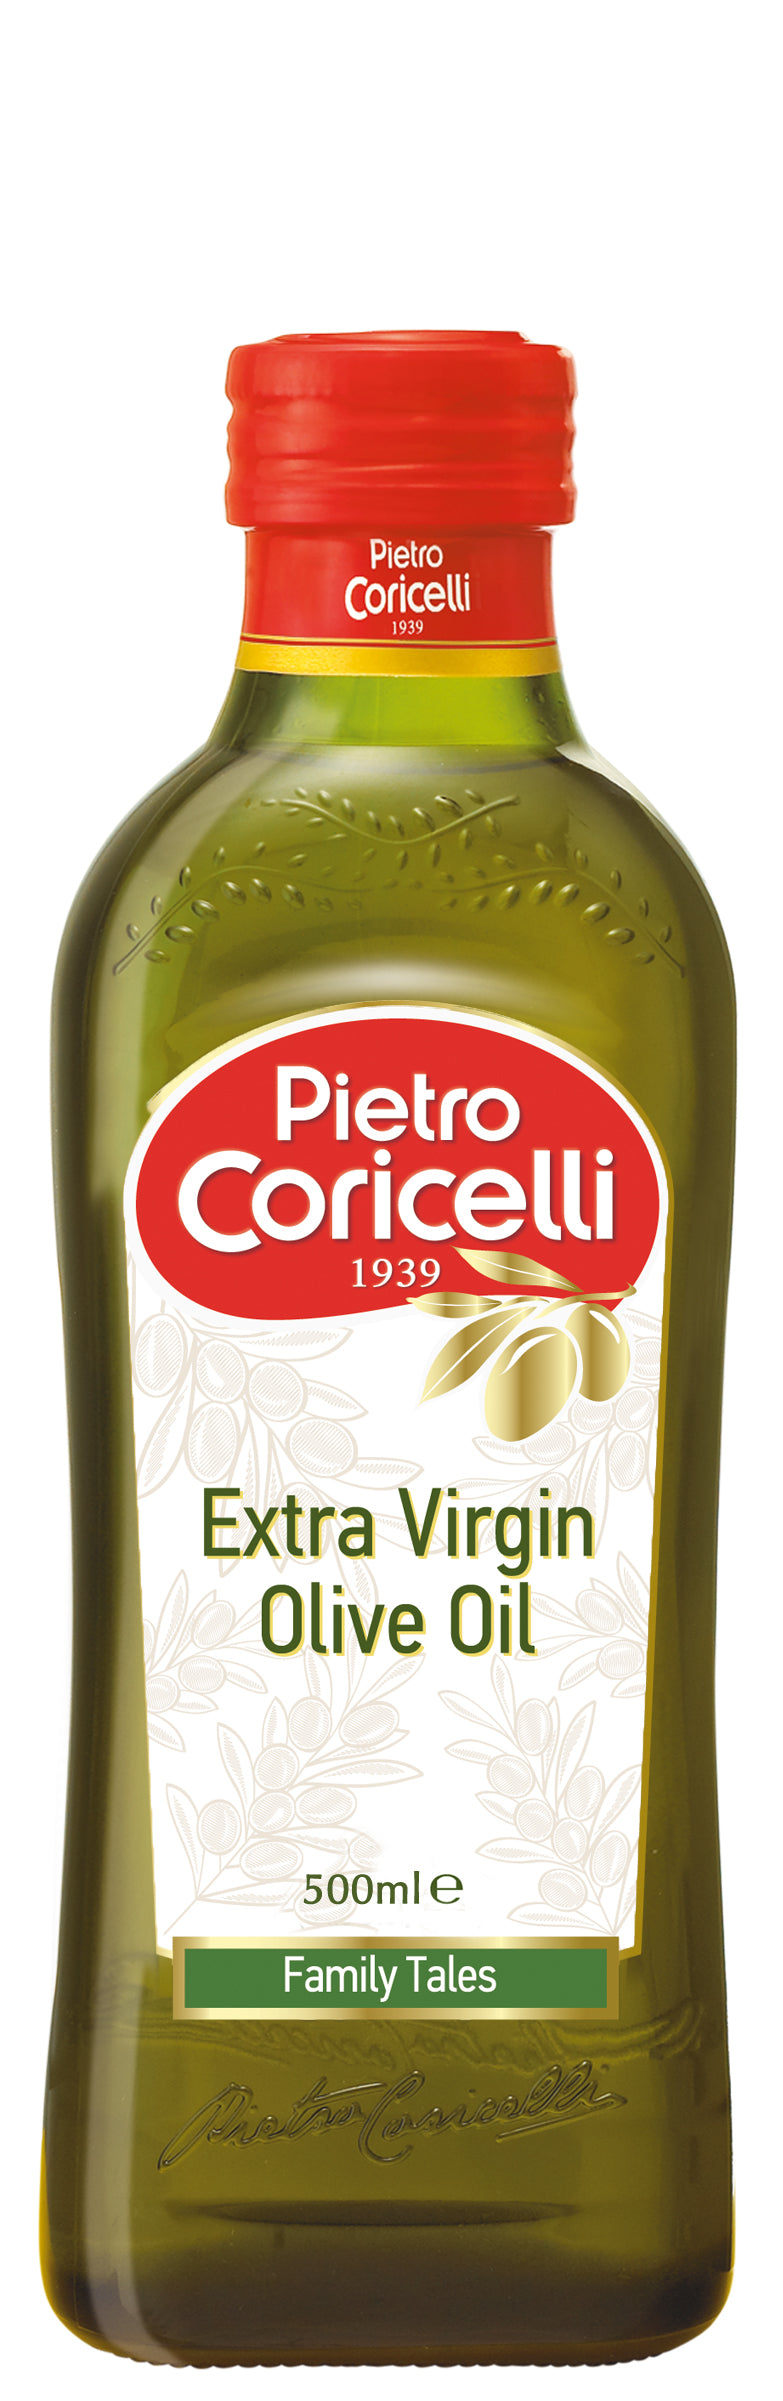 Pietro Coricelli Extra Virgin Olive Oil 500ml